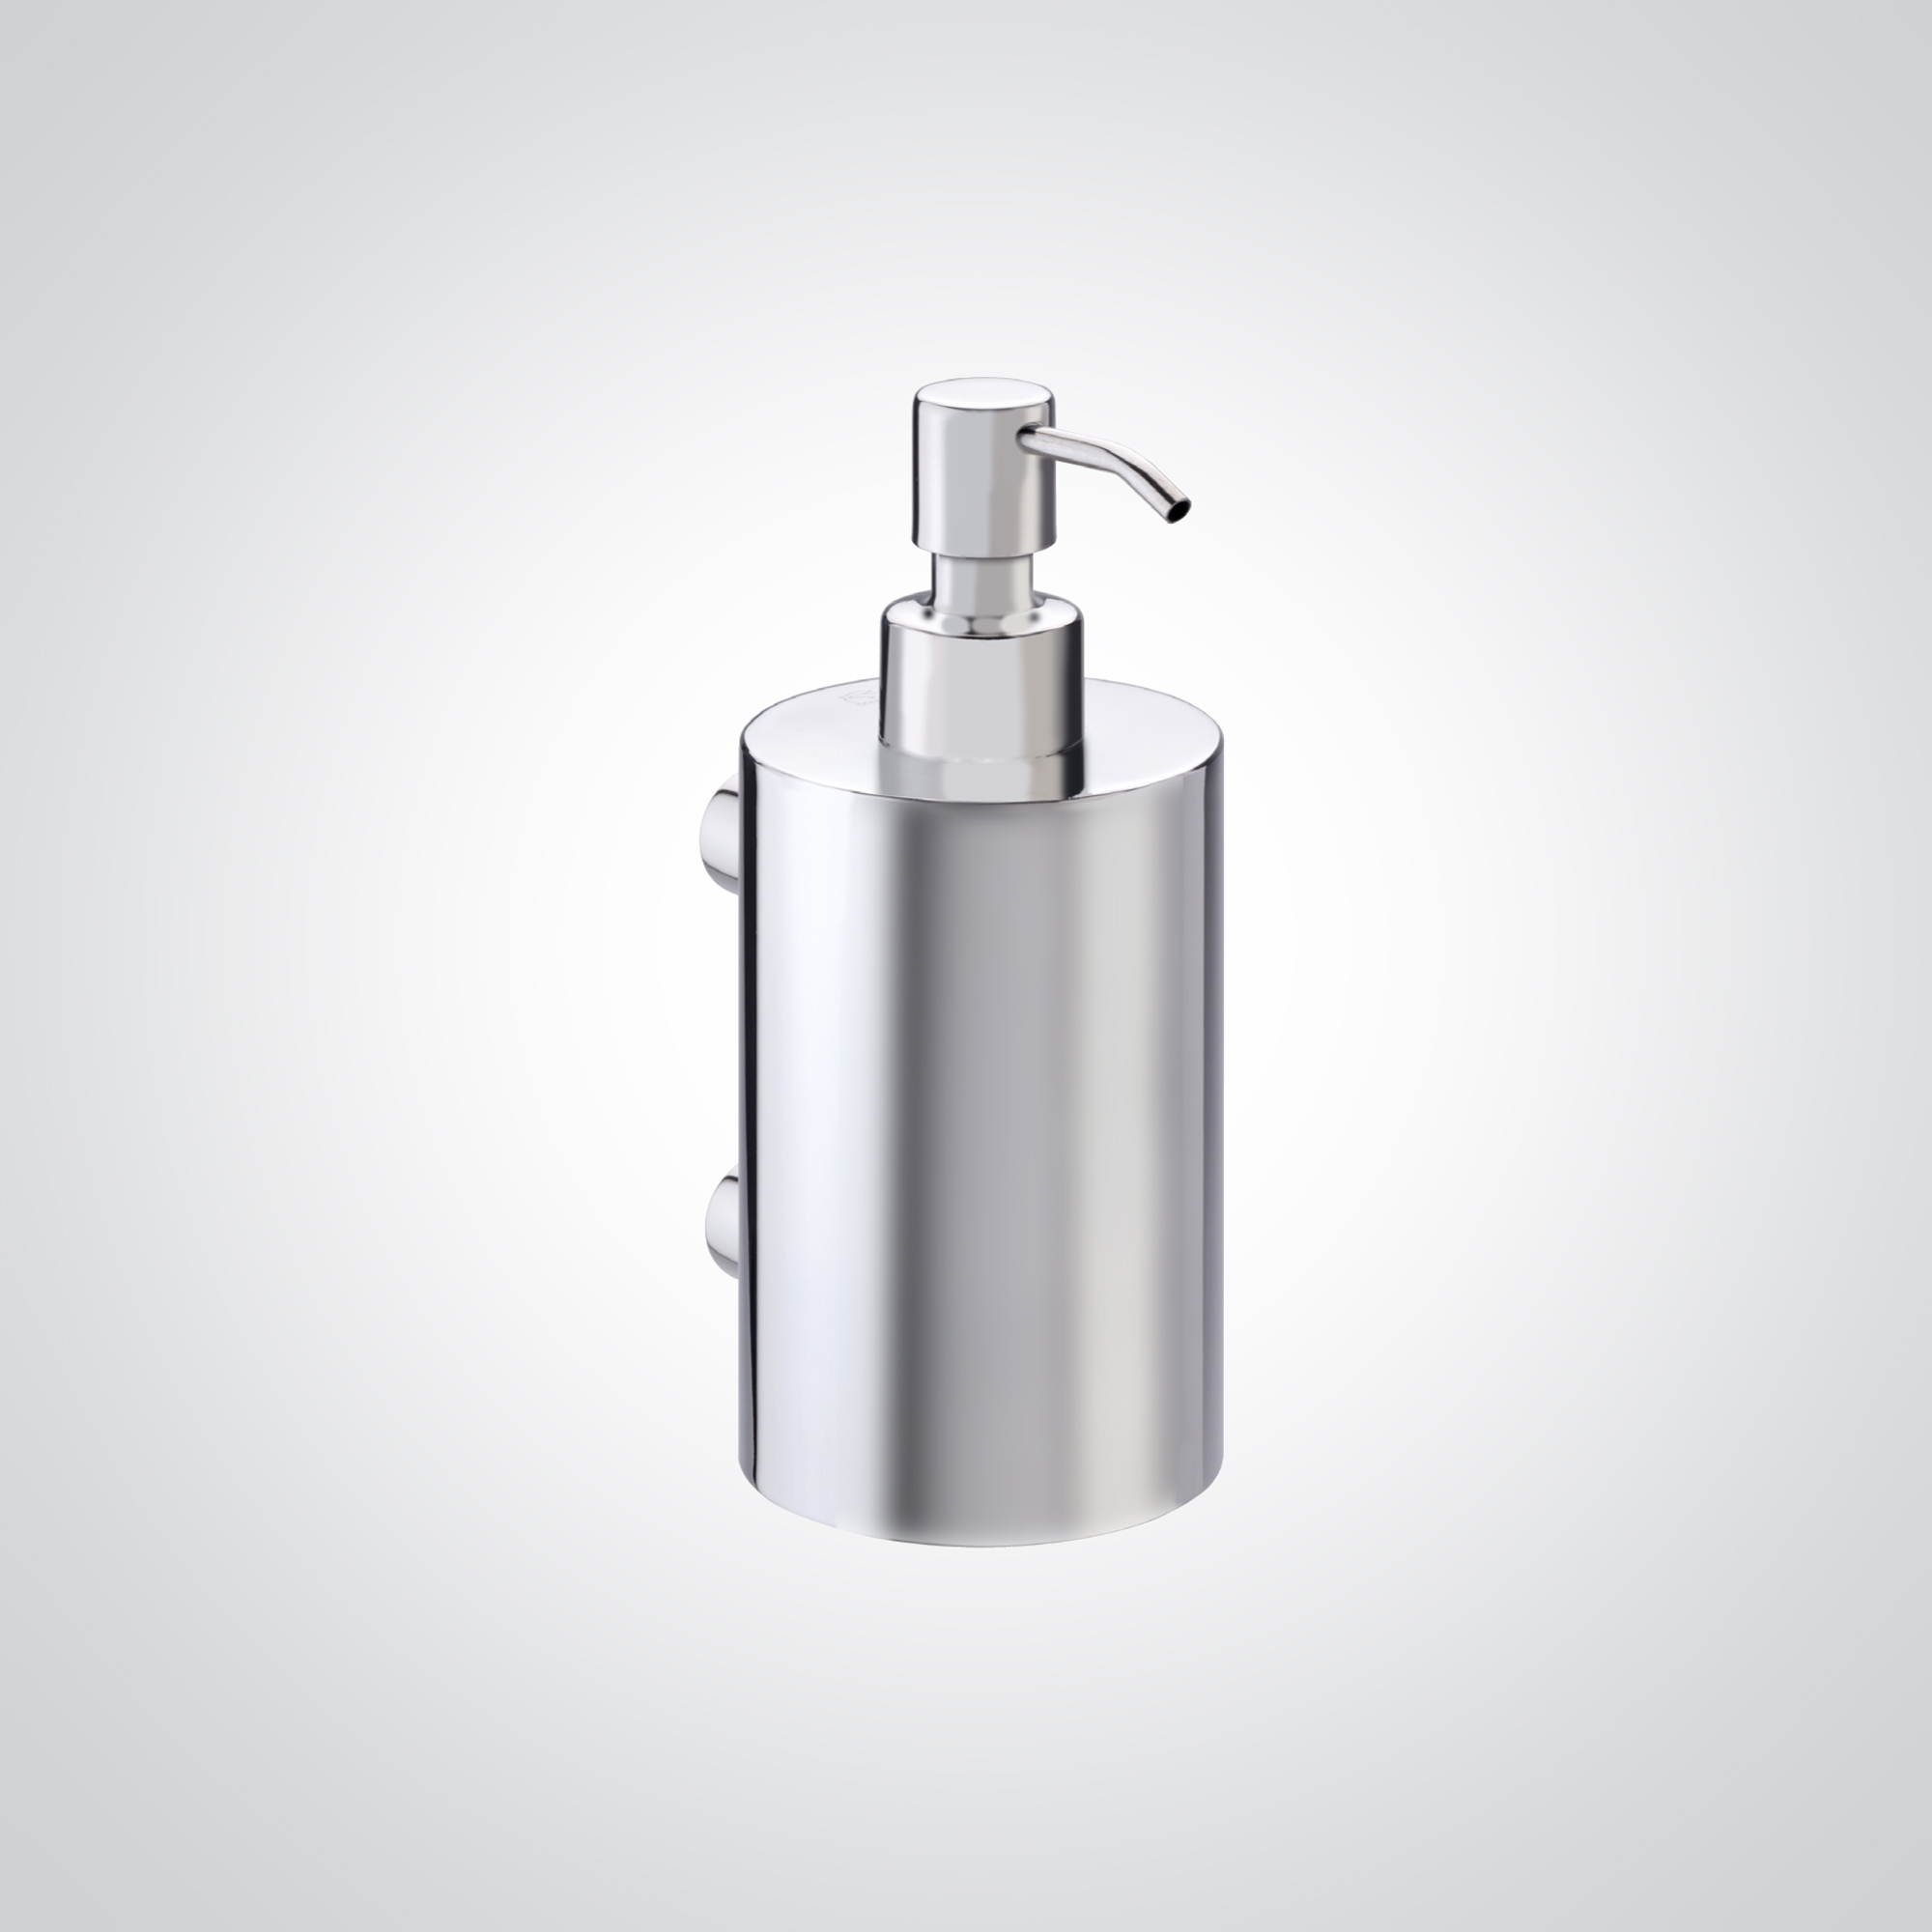 Stainless Steel Pump Soap Dispenser